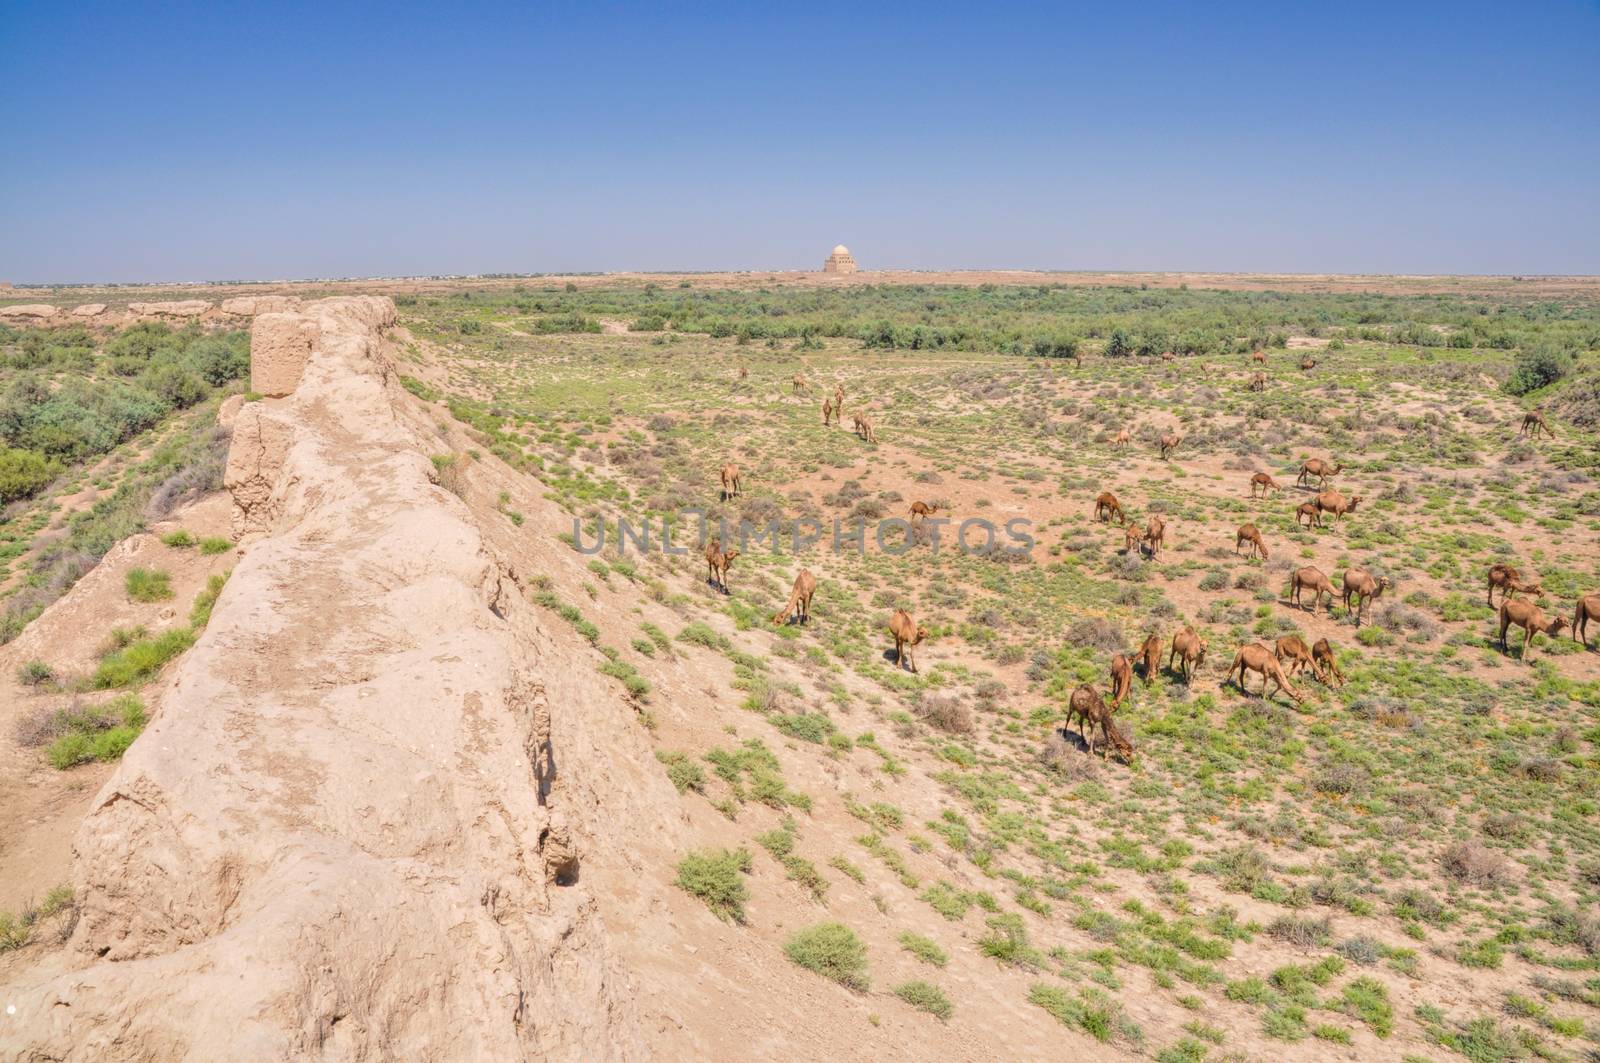 Herd of camels in desert near ancient city of Merv, Turkmenistan